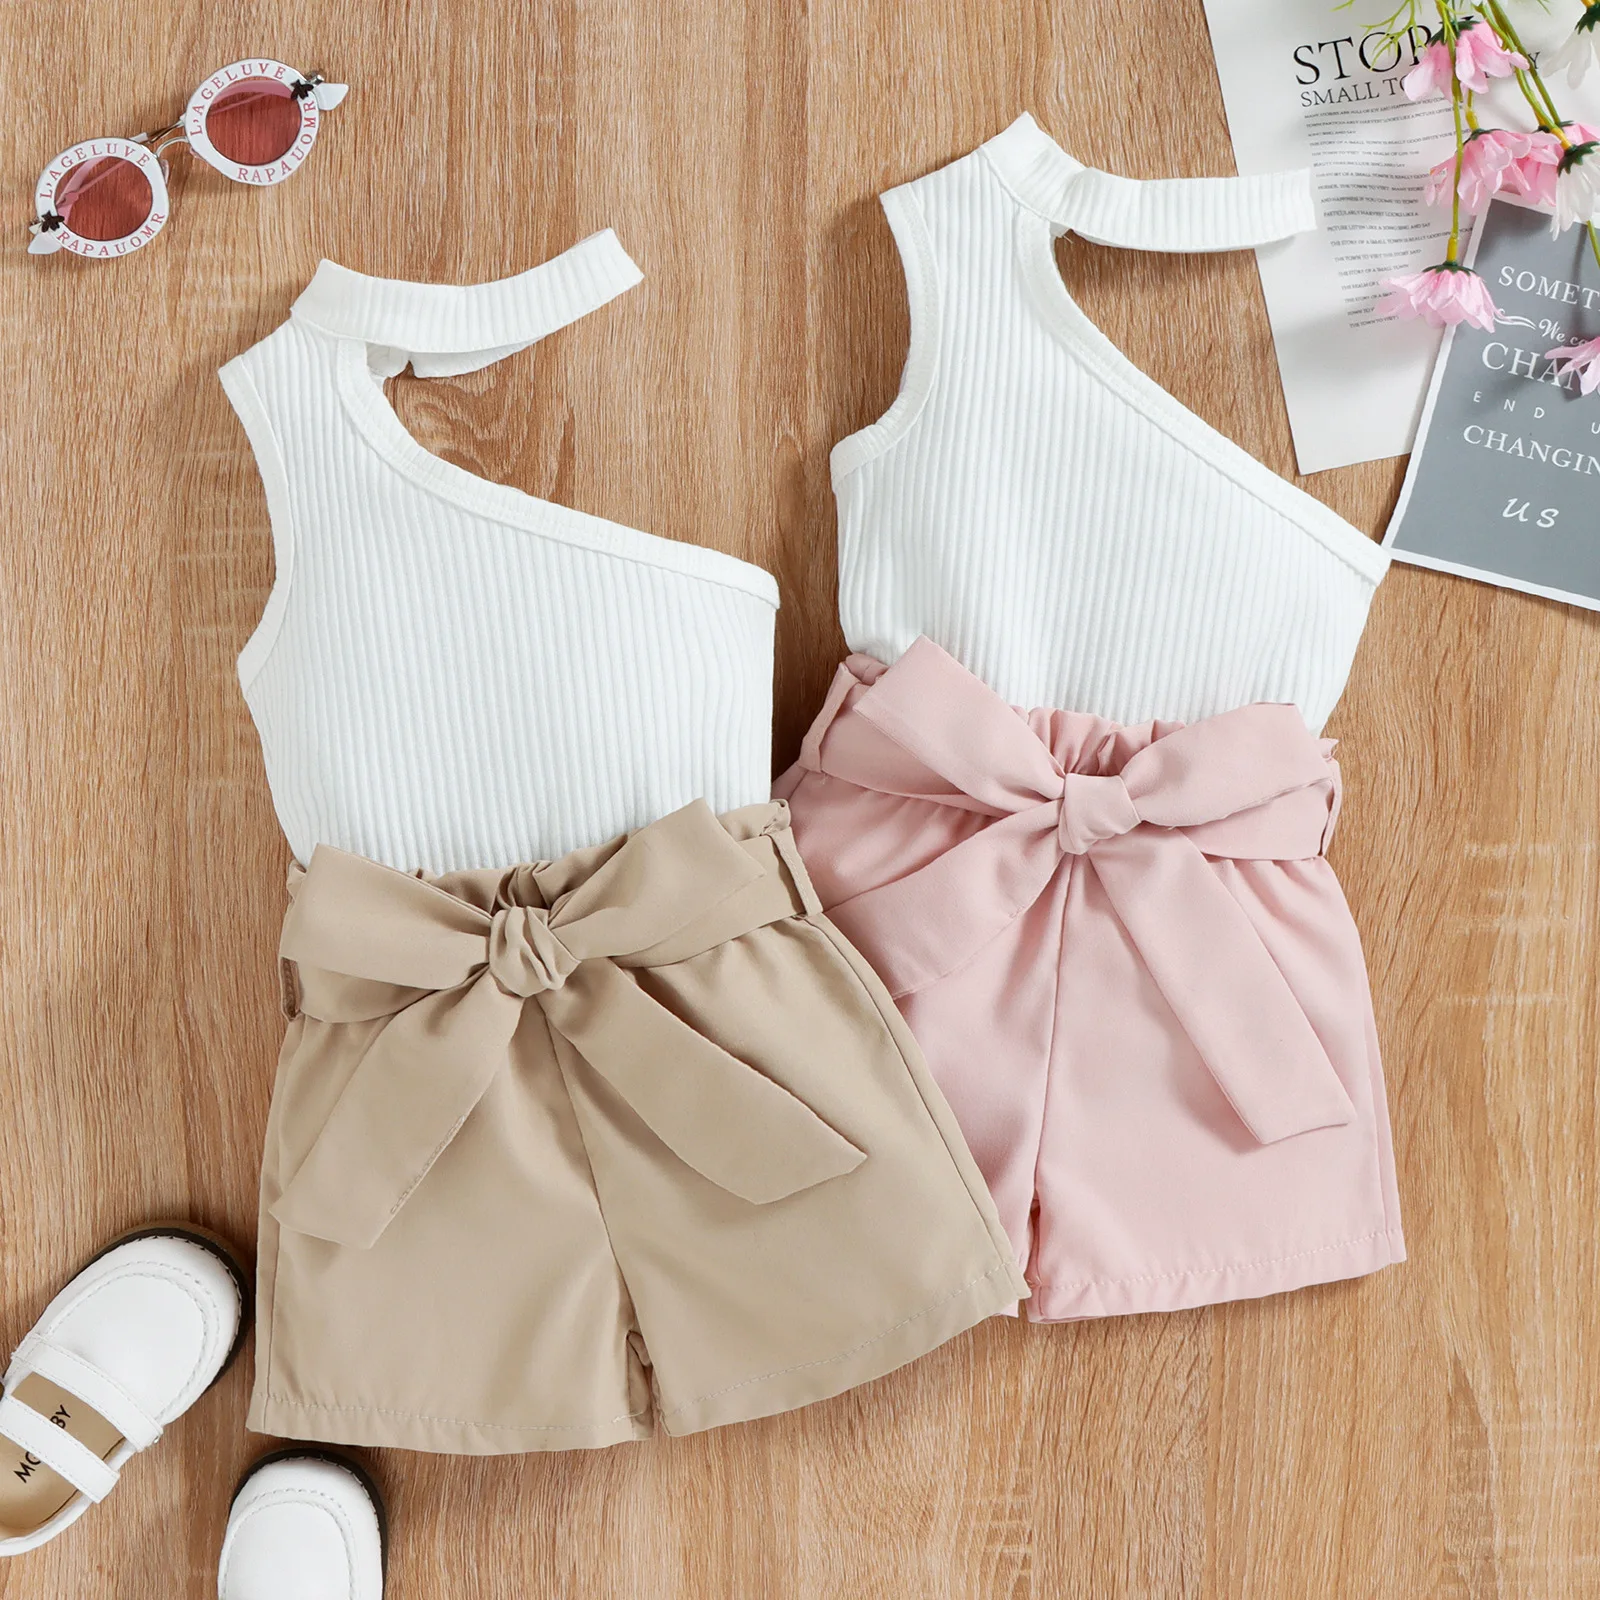 2023 Boutique One Shoulder White T-Shirt Shorts Little Girls Summer Clothes Sets Sleeveless Tanks Waist Belt 2 Piece Outfits